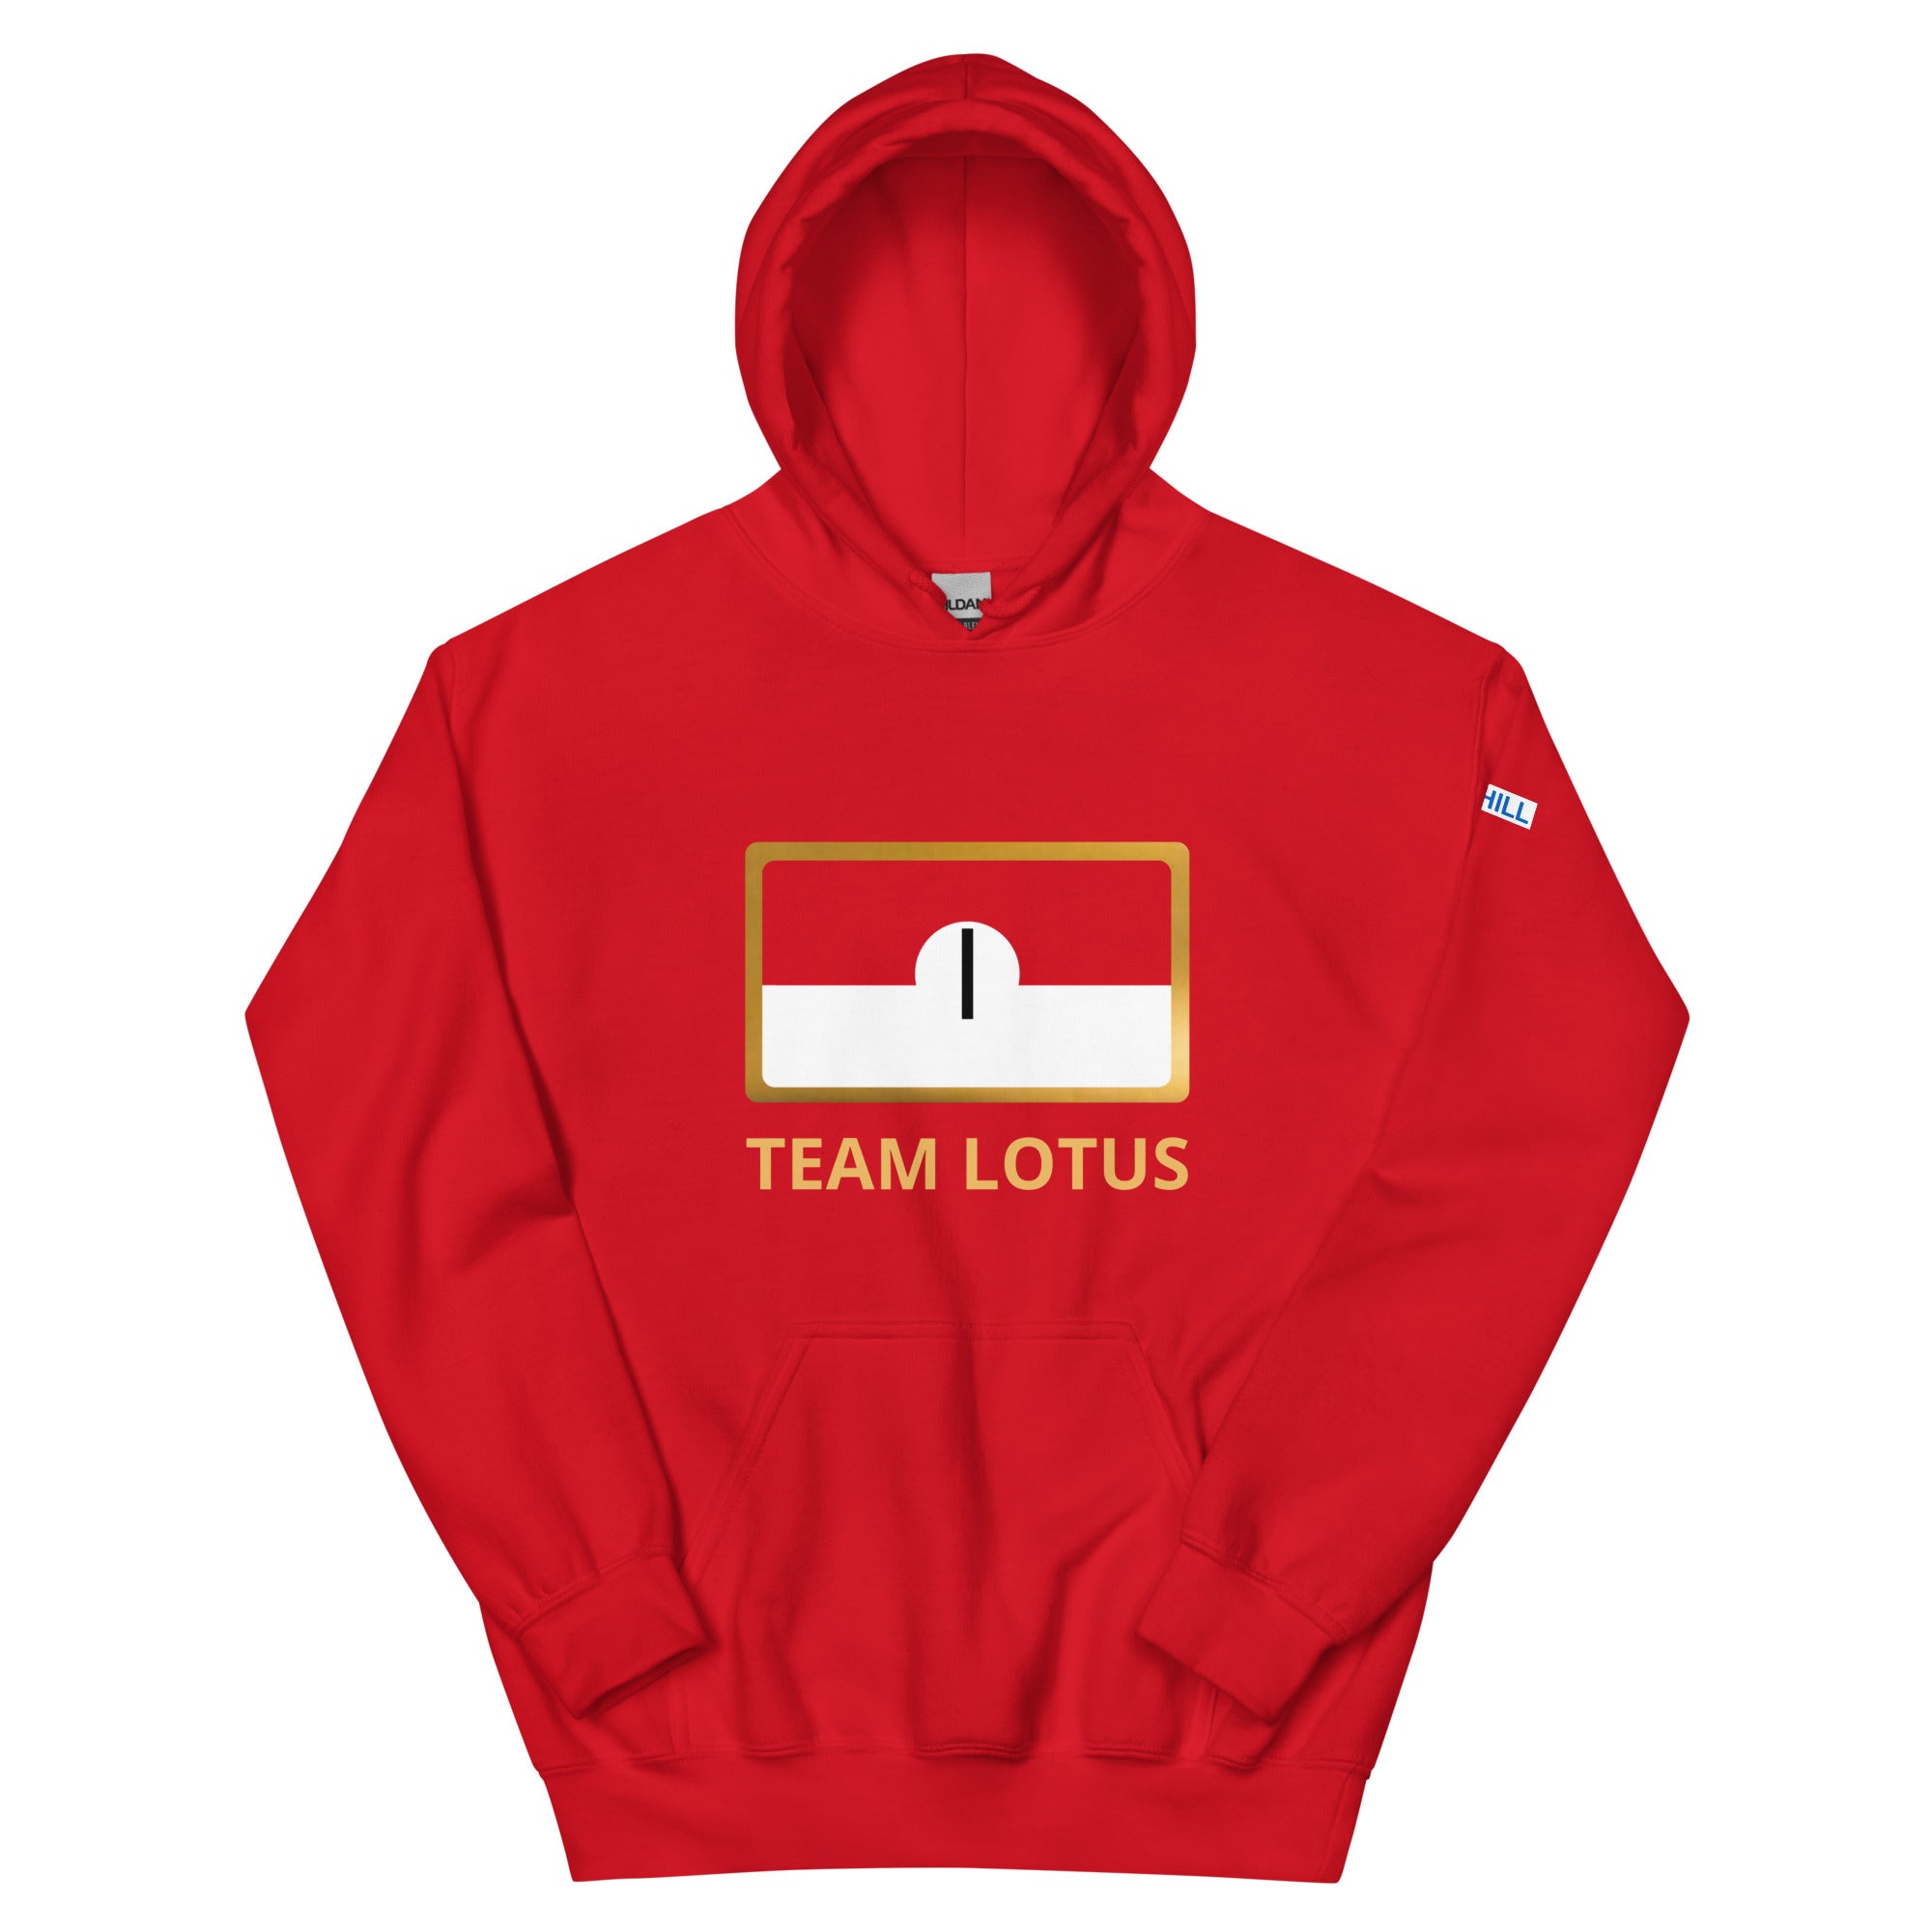 1: Hill Team Lotus 49B f1 world champion red hoodie front flat